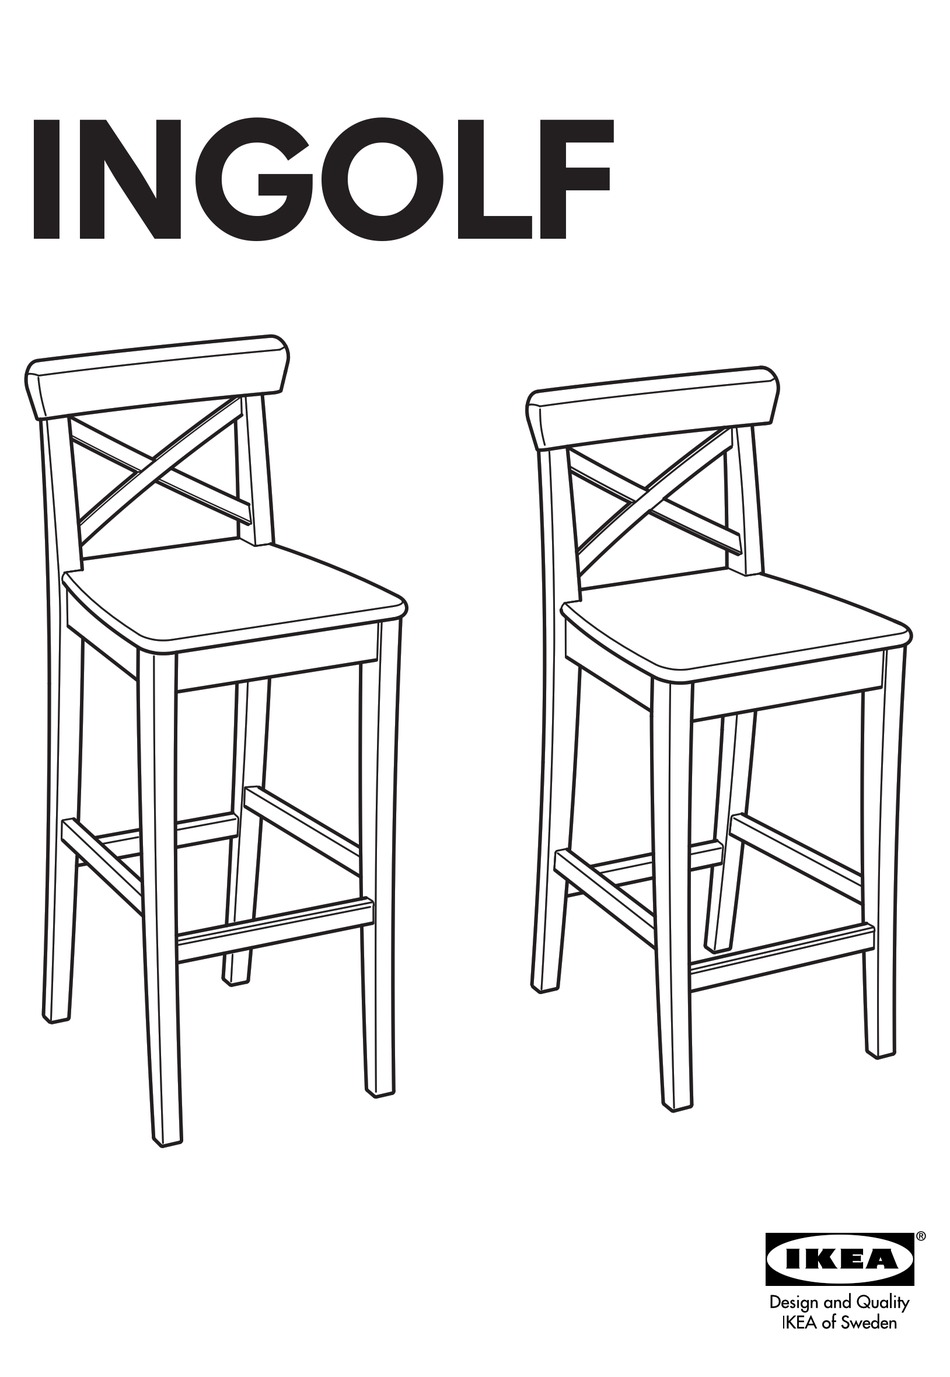 Ikea Ingolf Bar Stool W Backrest 24 3 4, Ikea Ingolf Black Bar Stool